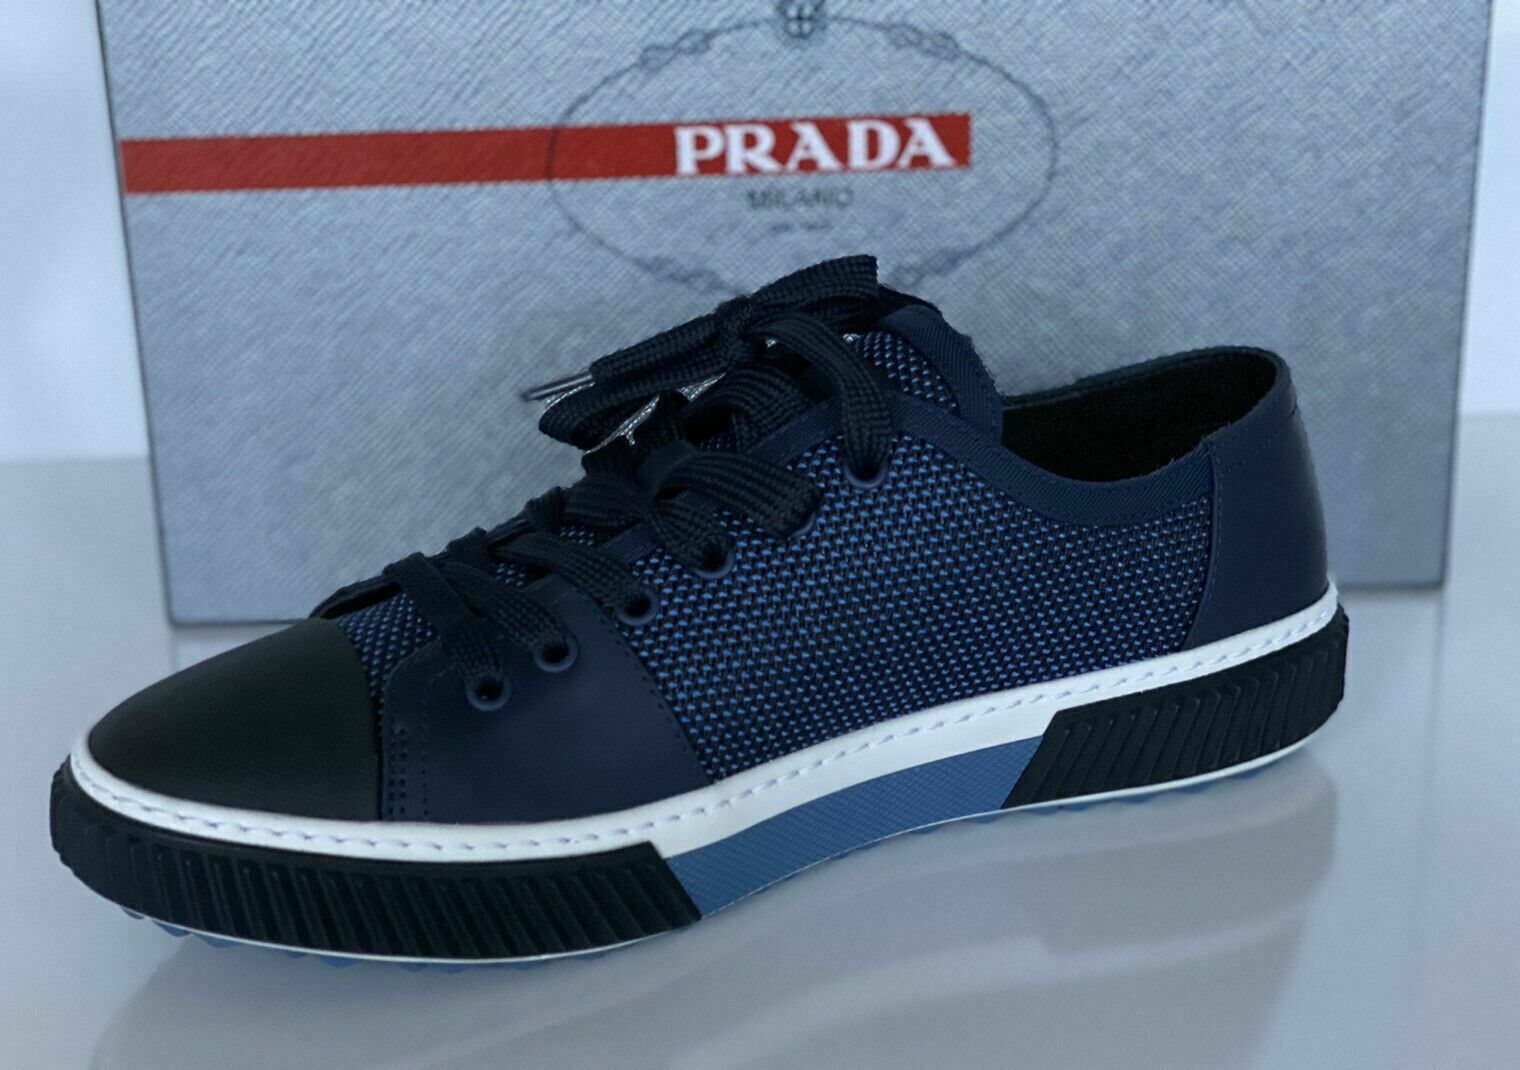 NIB PRADA Men's Blue Leather/Nylon Sneakers 8.5 US (Prada 7.5) 4E3058